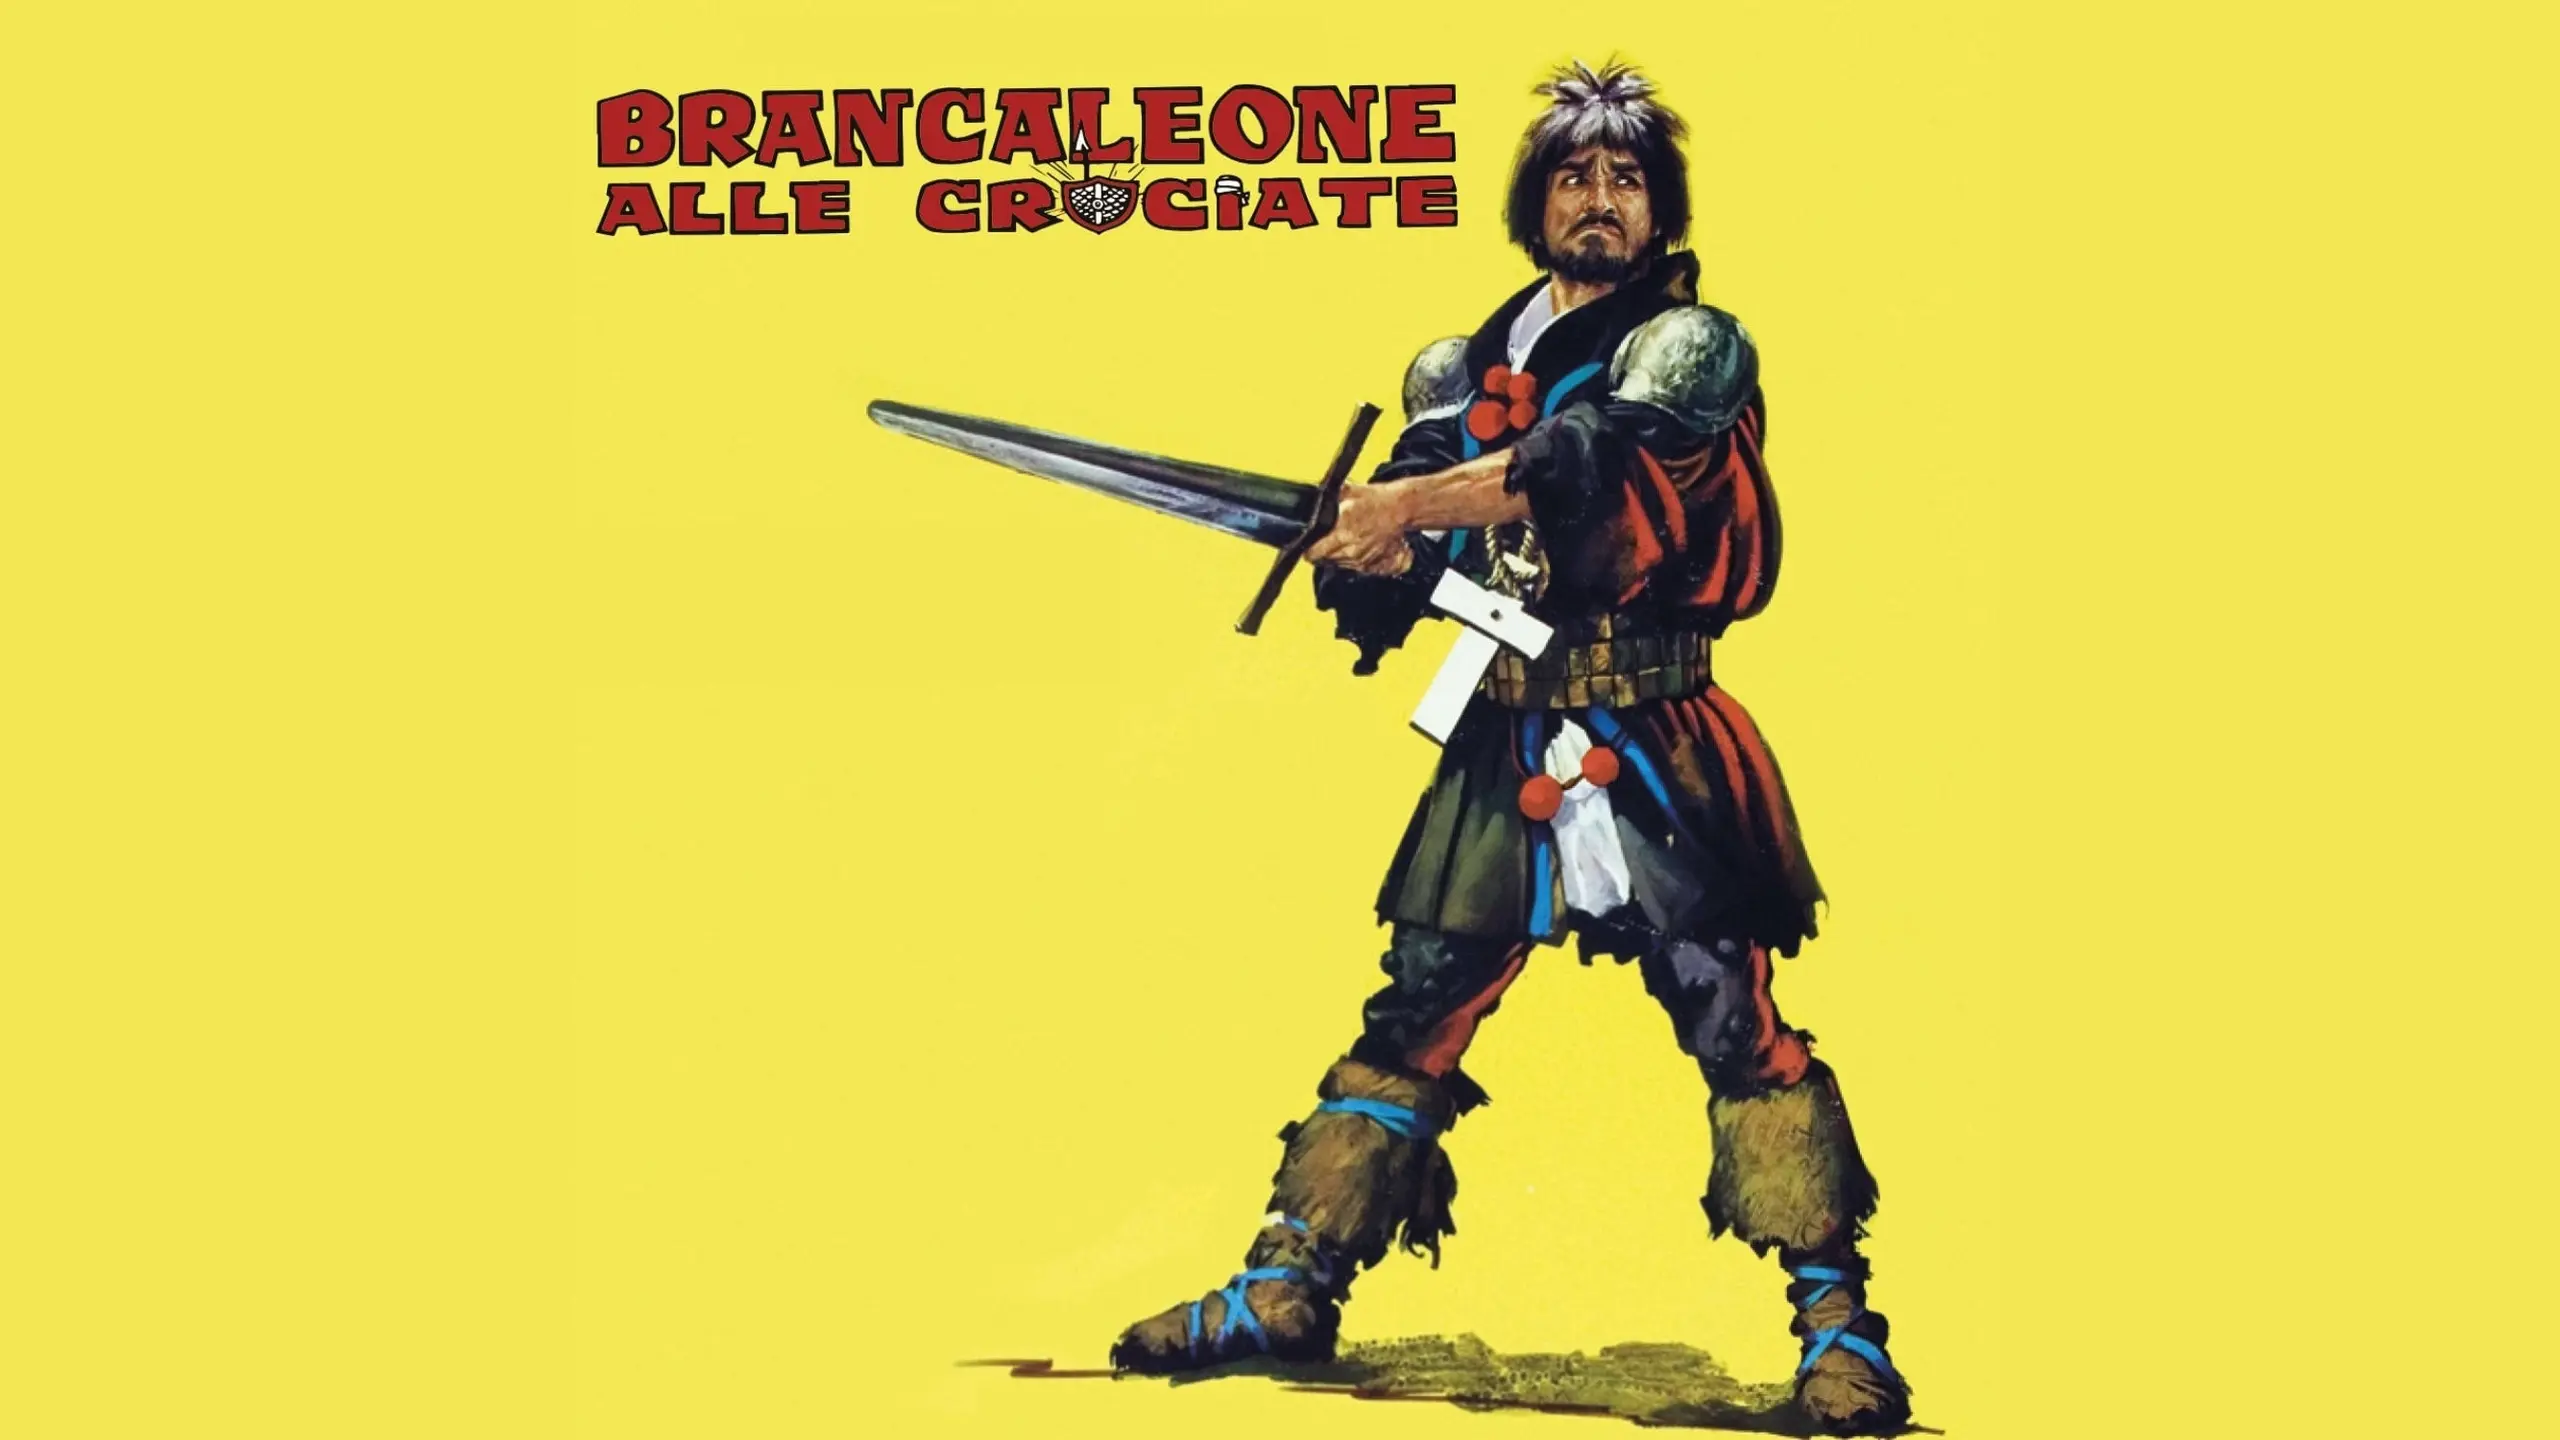 Brancaleone auf Kreuzzug ins Heilige Land